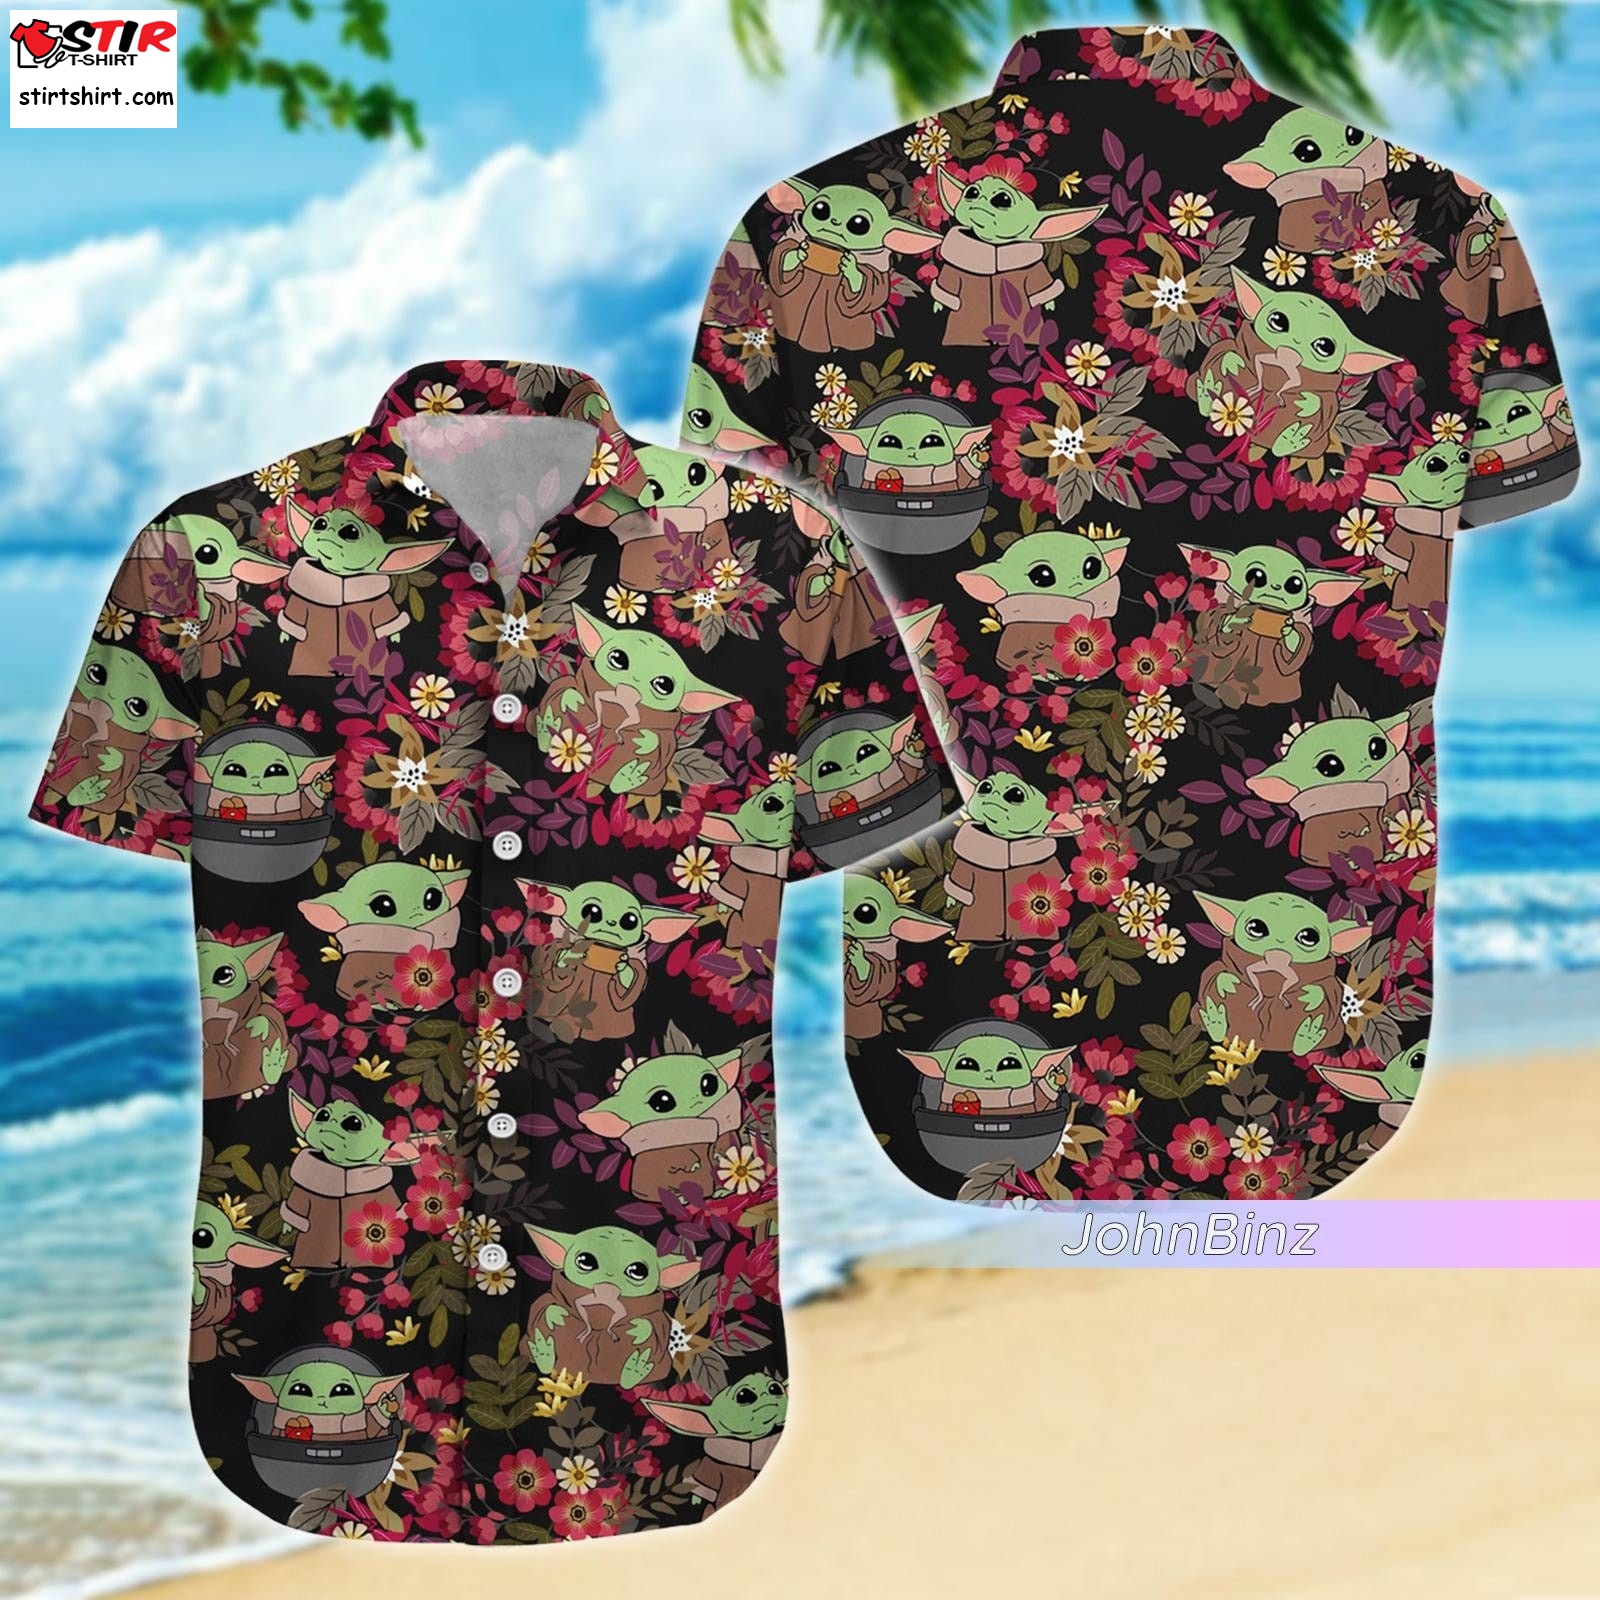 Baby Yoda Shirt, Star Wars Hawaiian Shirt, Star Wars The Mandalorian Button Down Shirt Short Sleeve, Gifts For Women Men, Unisex S 5Xl Adult  Baby Yoda 